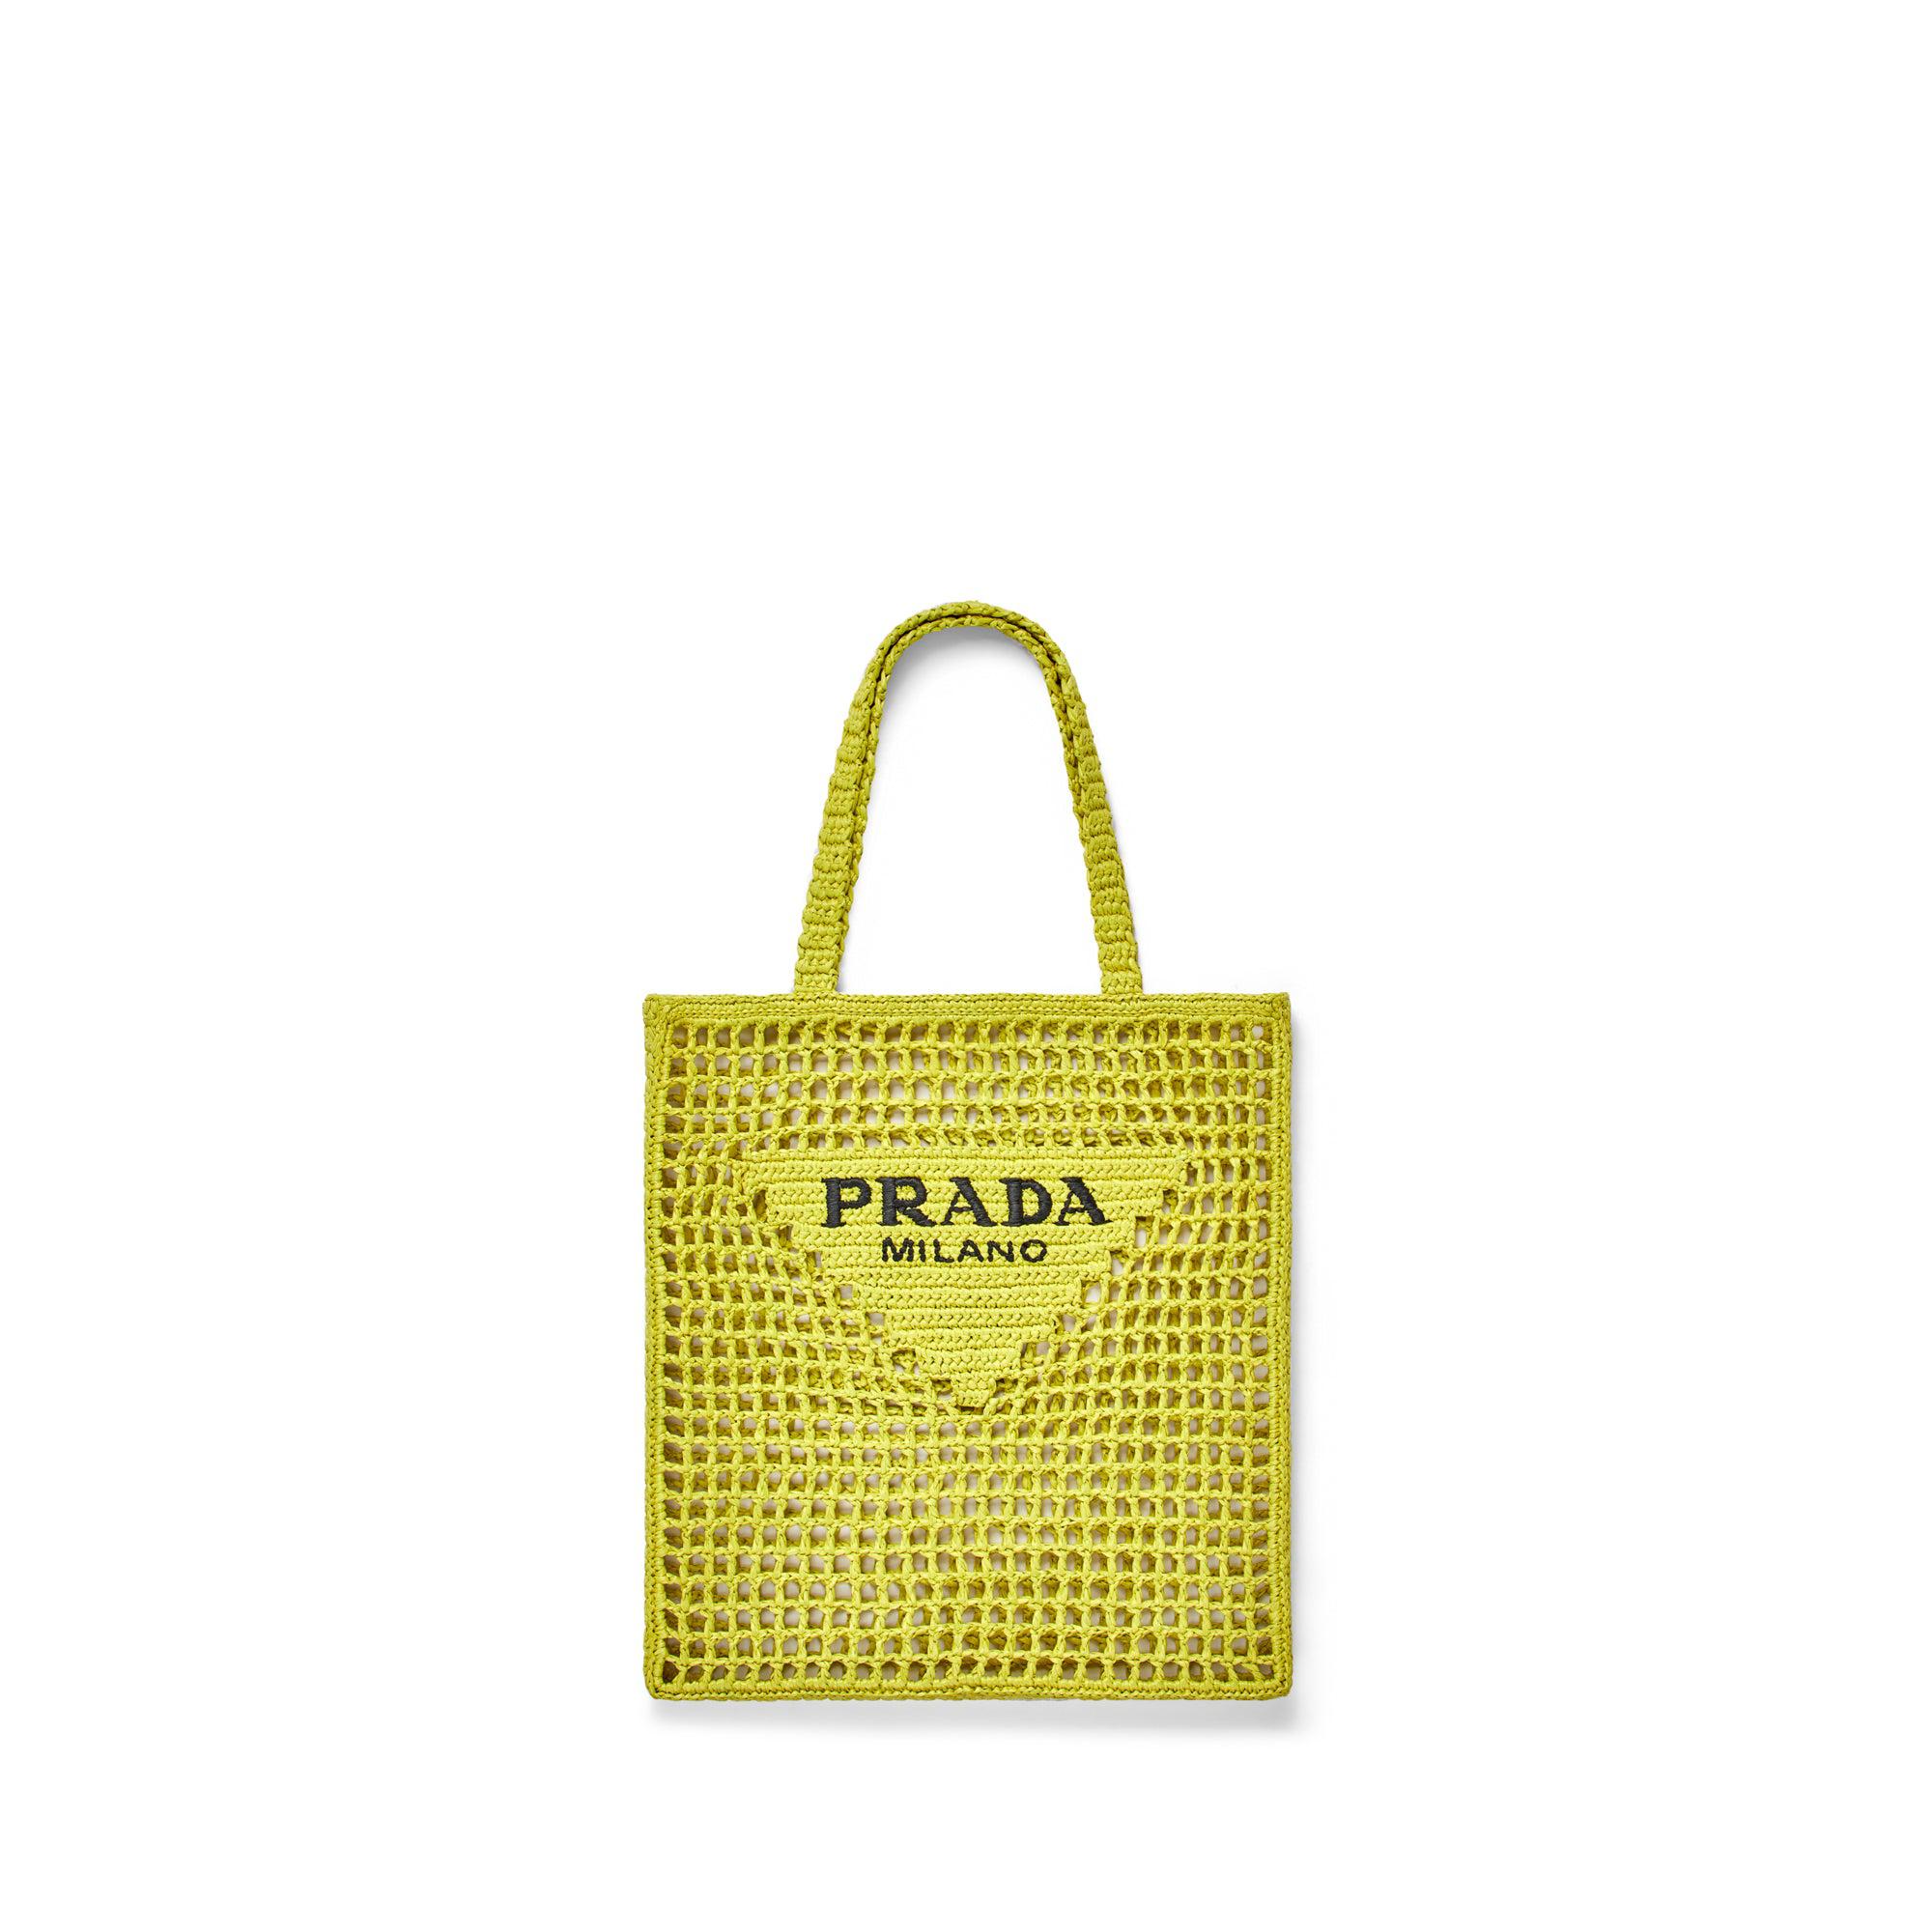 Prada Women's Rafia Tote Bag (Cedar) by PRADA